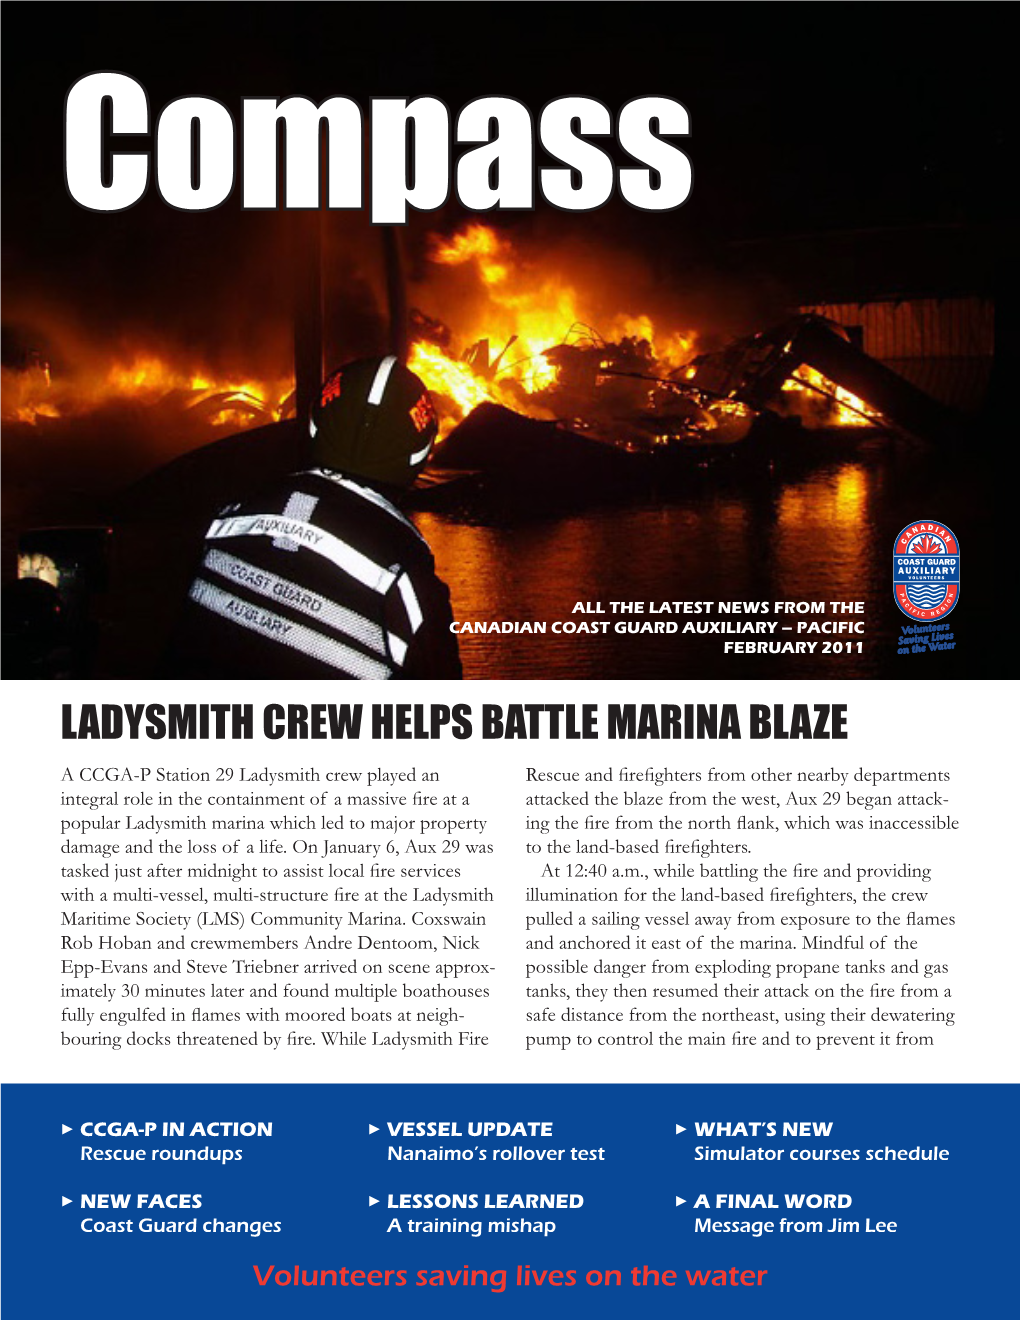 Ladysmith Crew Helps Battle Marina Blaze